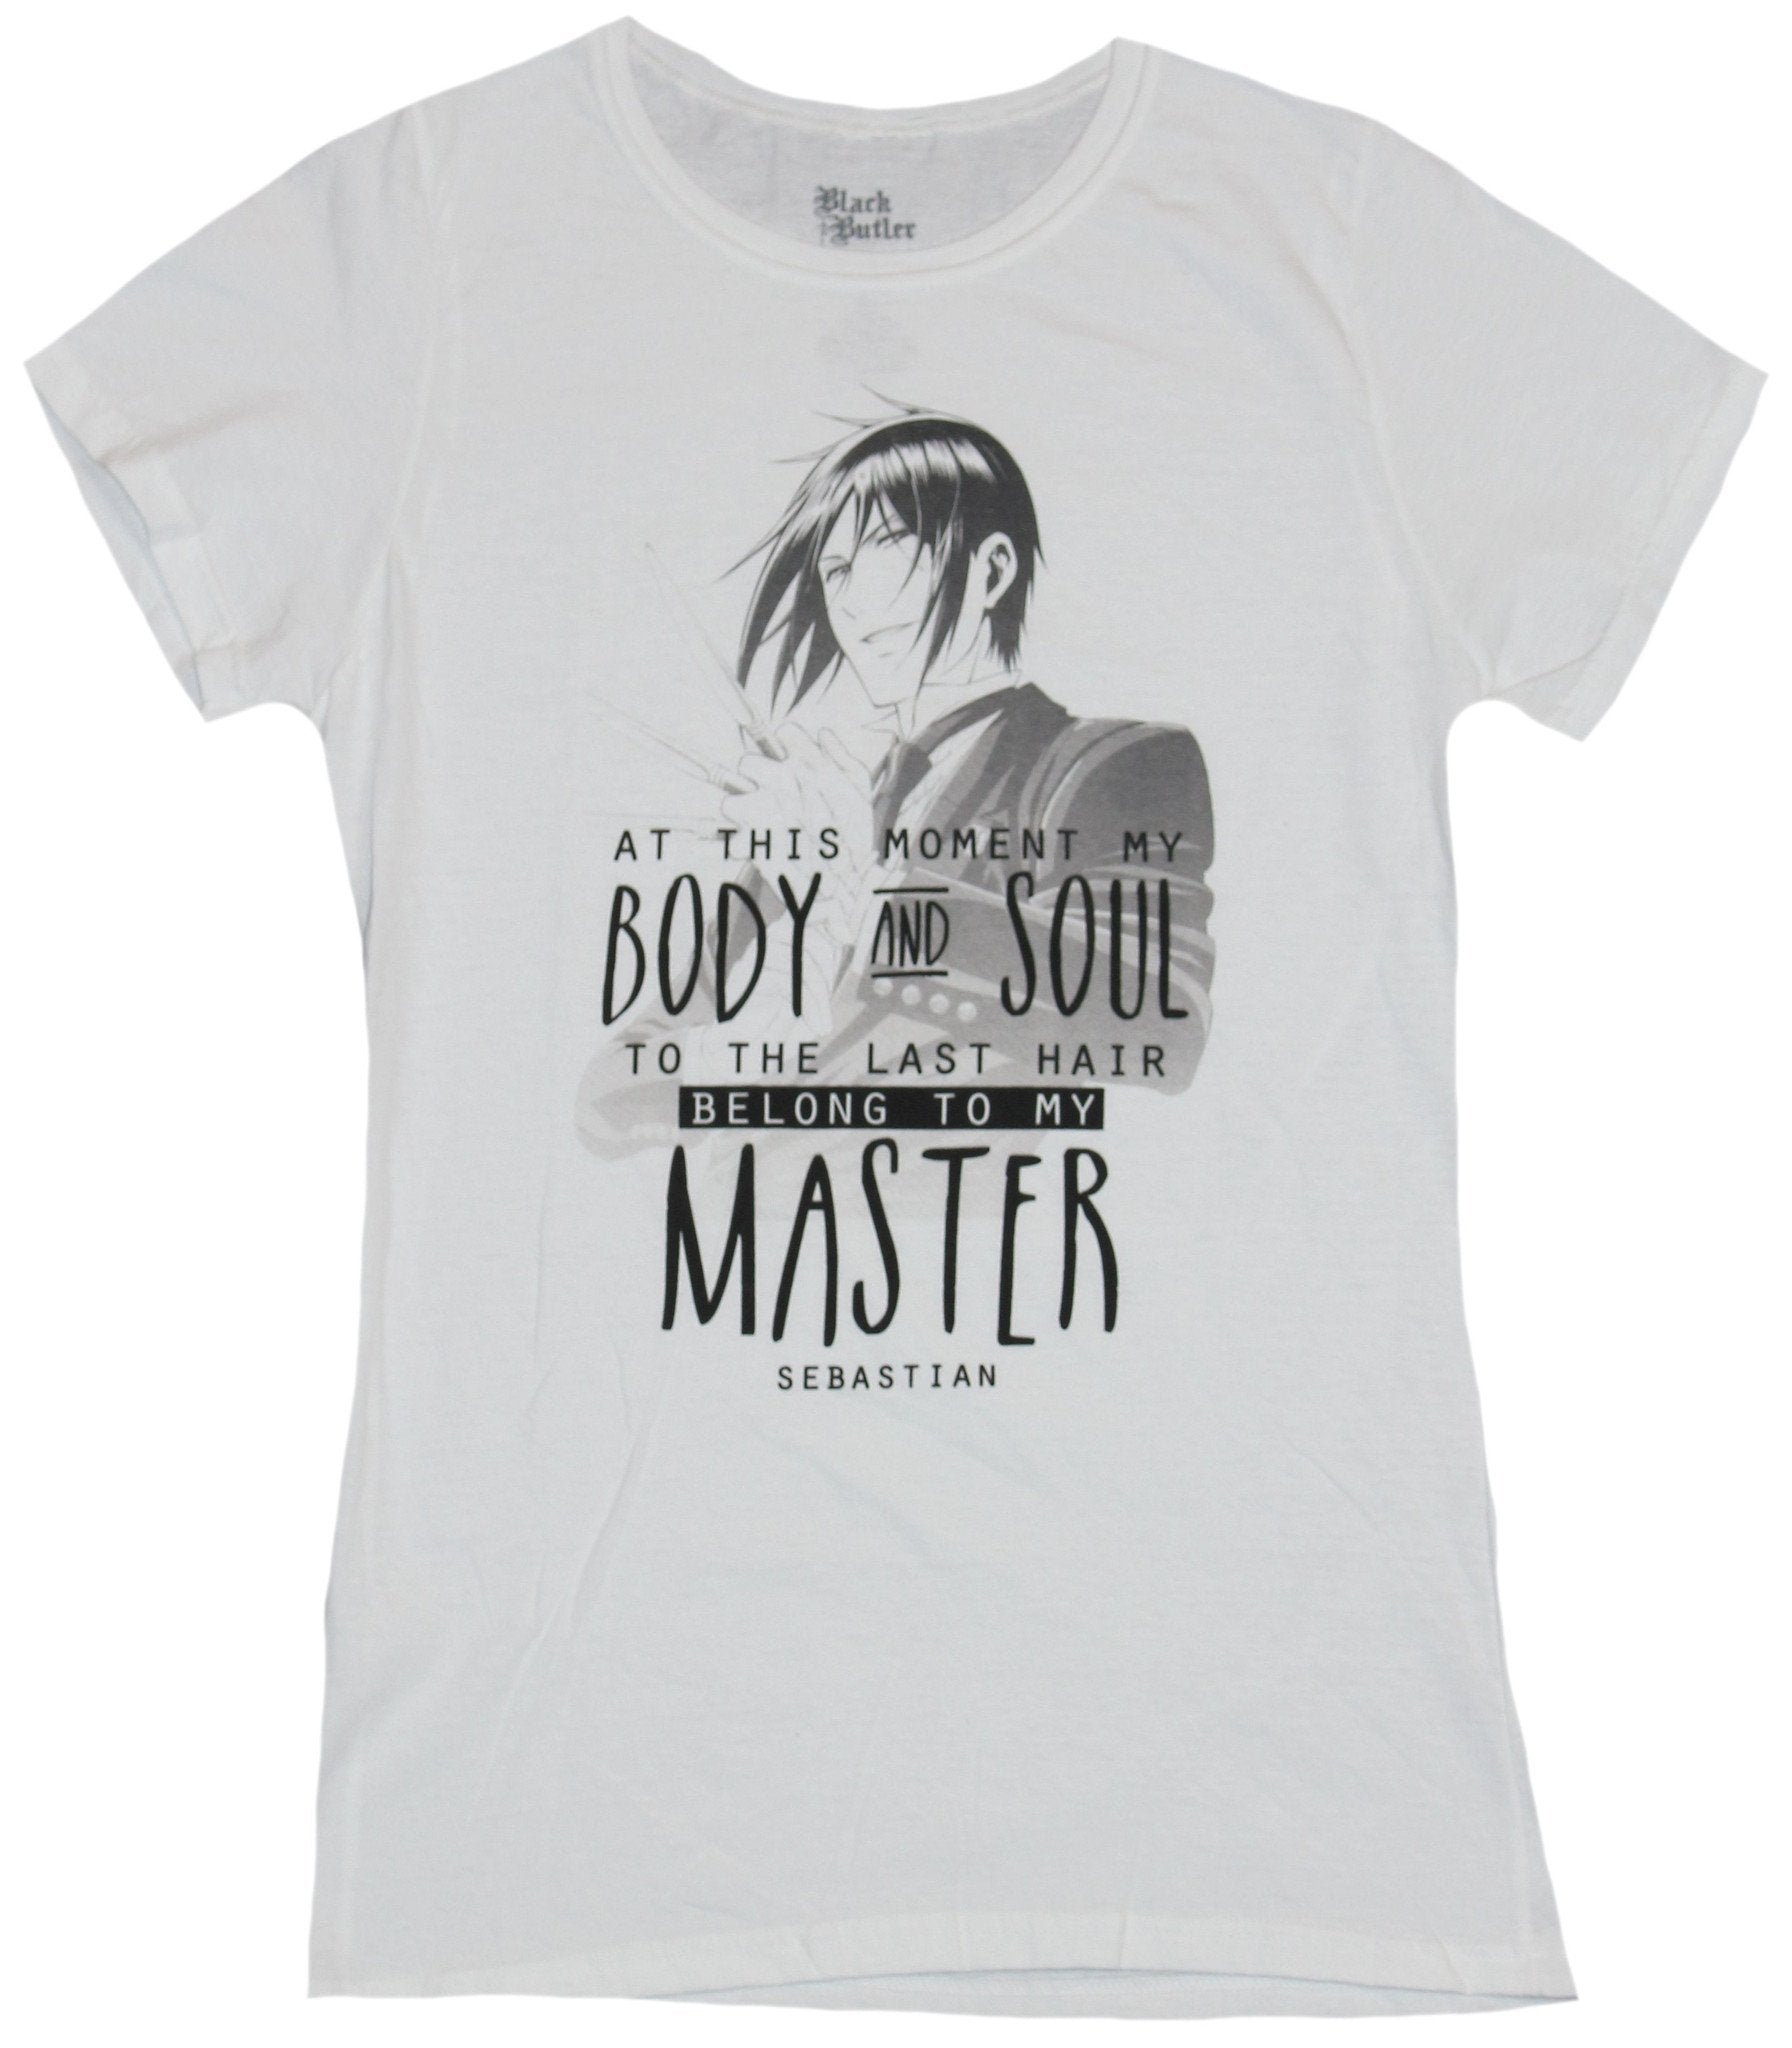 Black Butler Girls Juniors T-Shirt - Body & Soul Belong to Master Sebastian